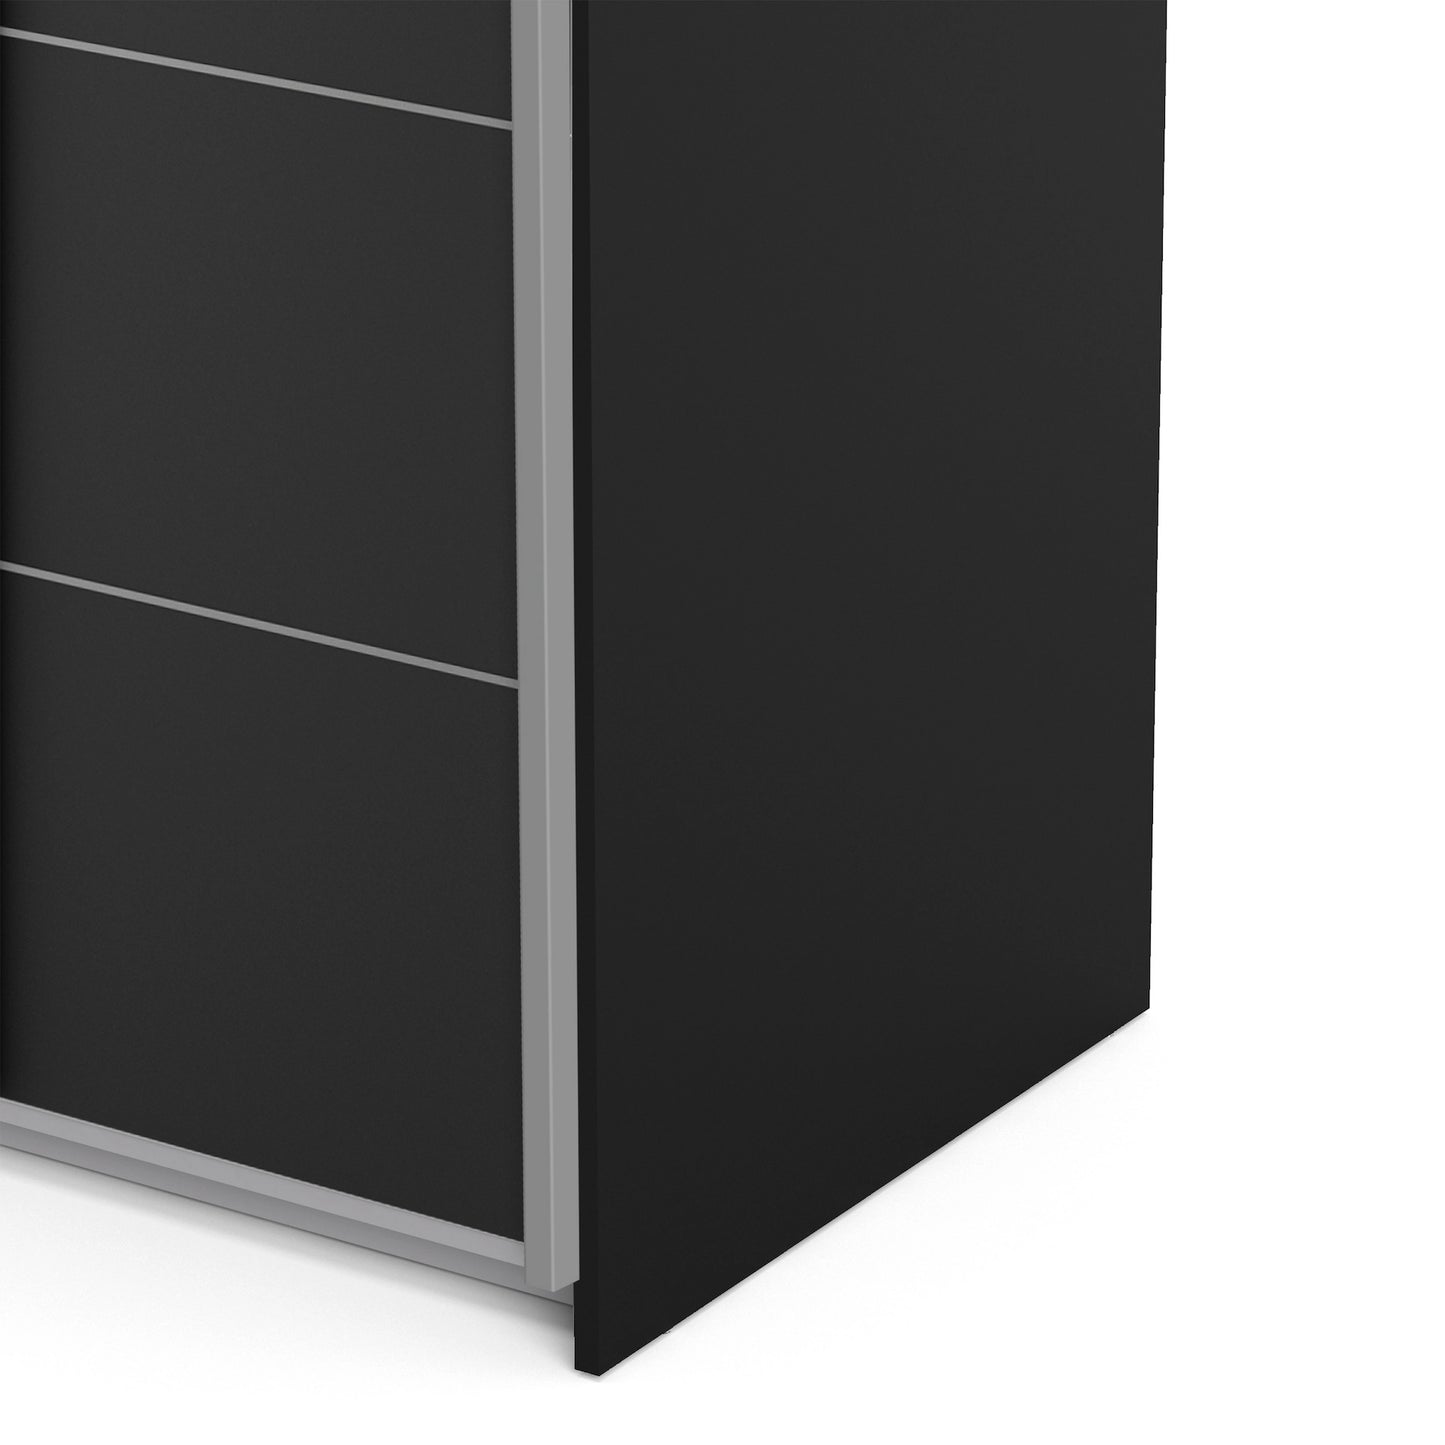 Furniture To Go Verona Sliding Wardrobe 120cm in Black Matt with Black Matt Doors with 5 Shelves